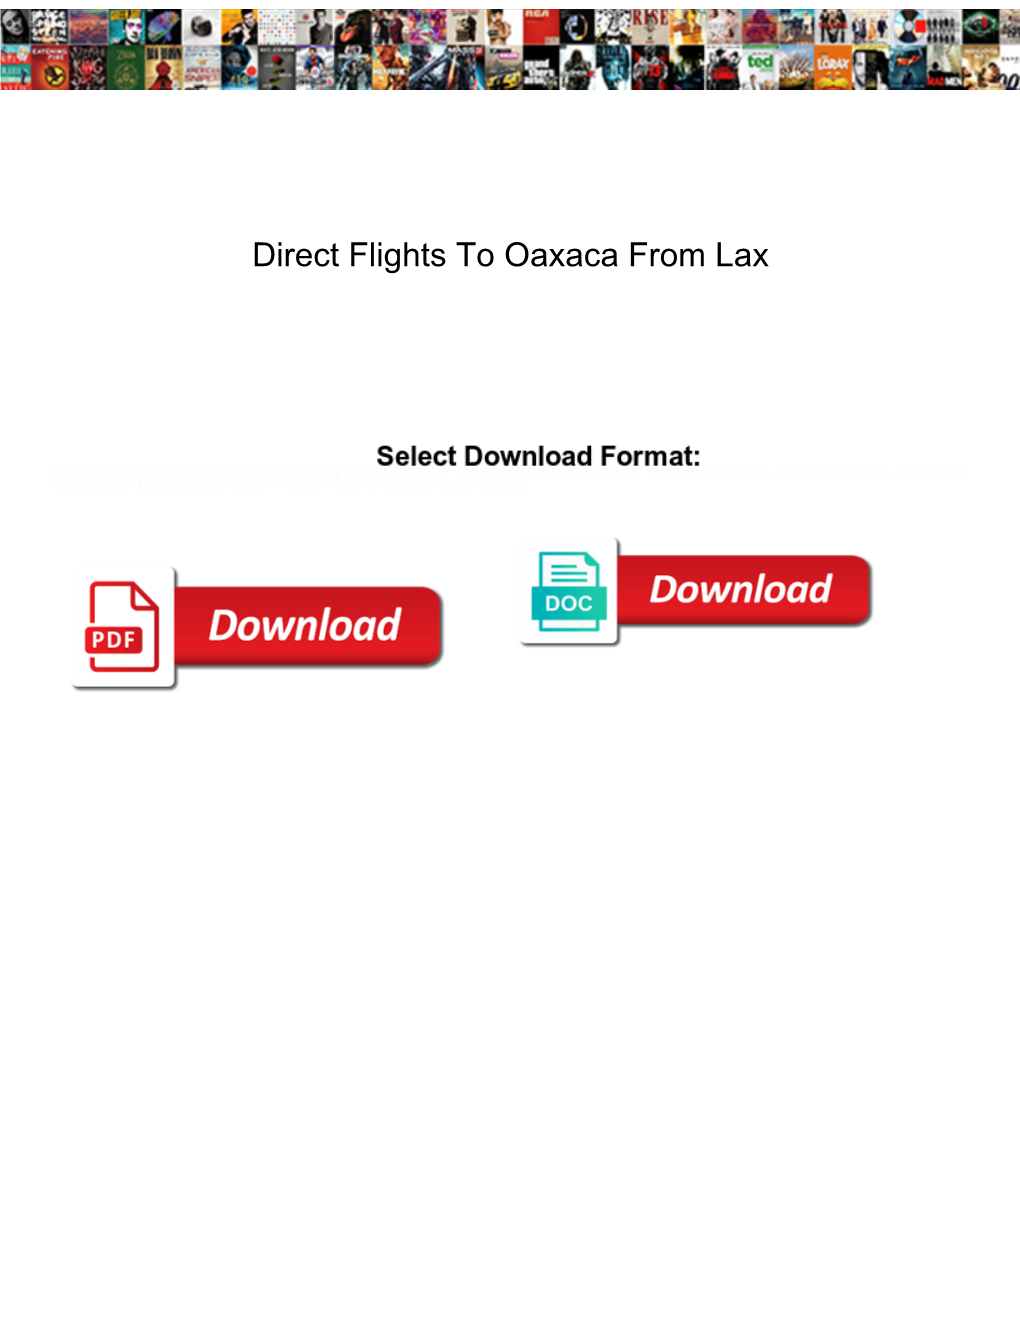 Direct Flights to Oaxaca from Lax